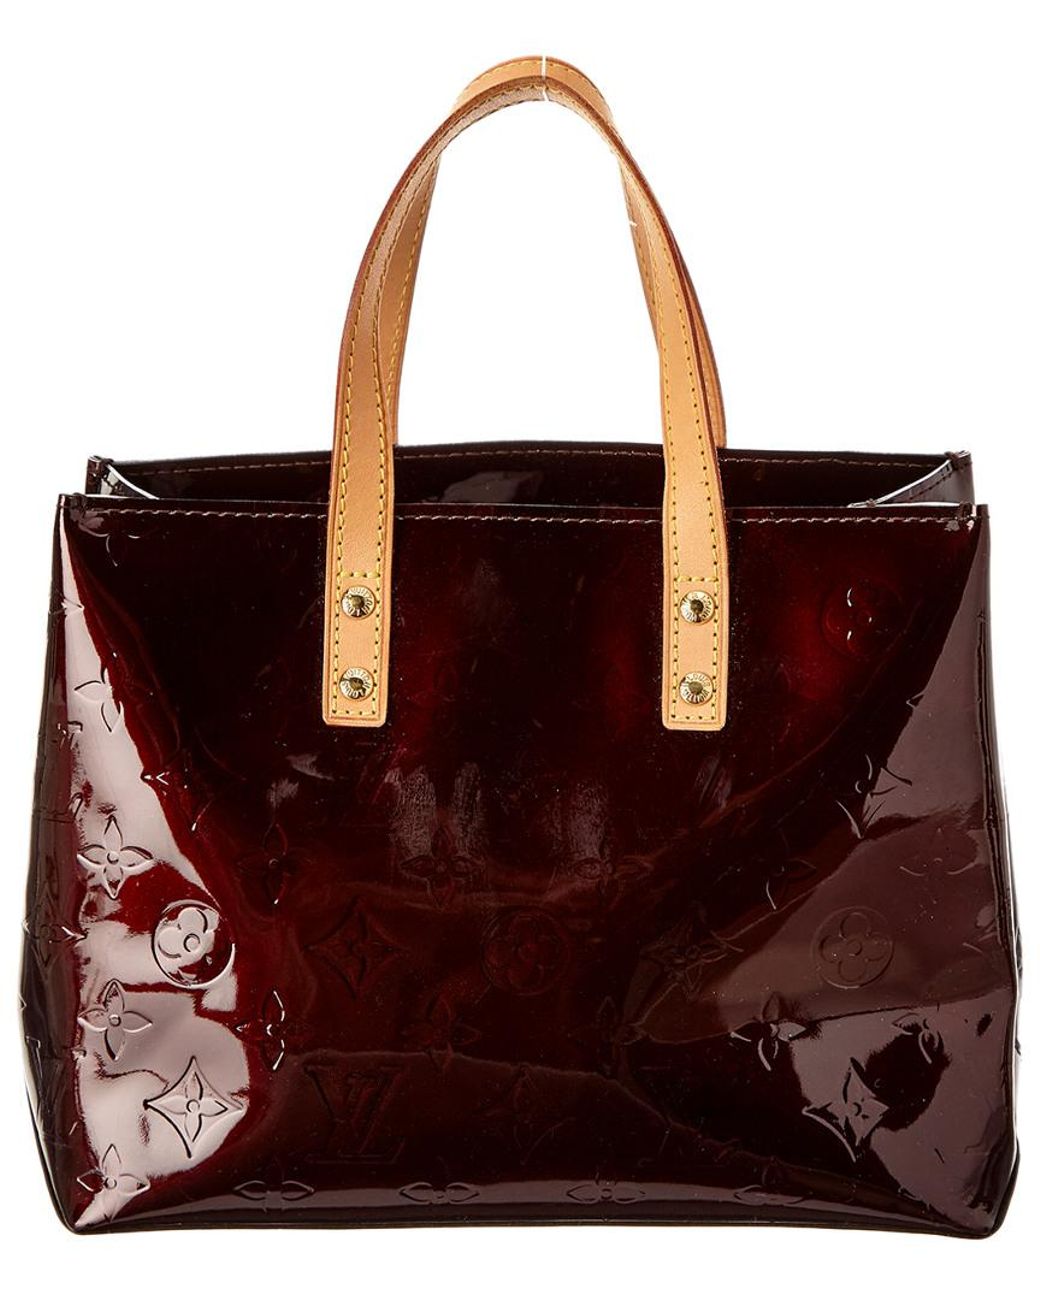 Louis Vuitton Reade Purple Canvas Handbag (Pre-Owned)